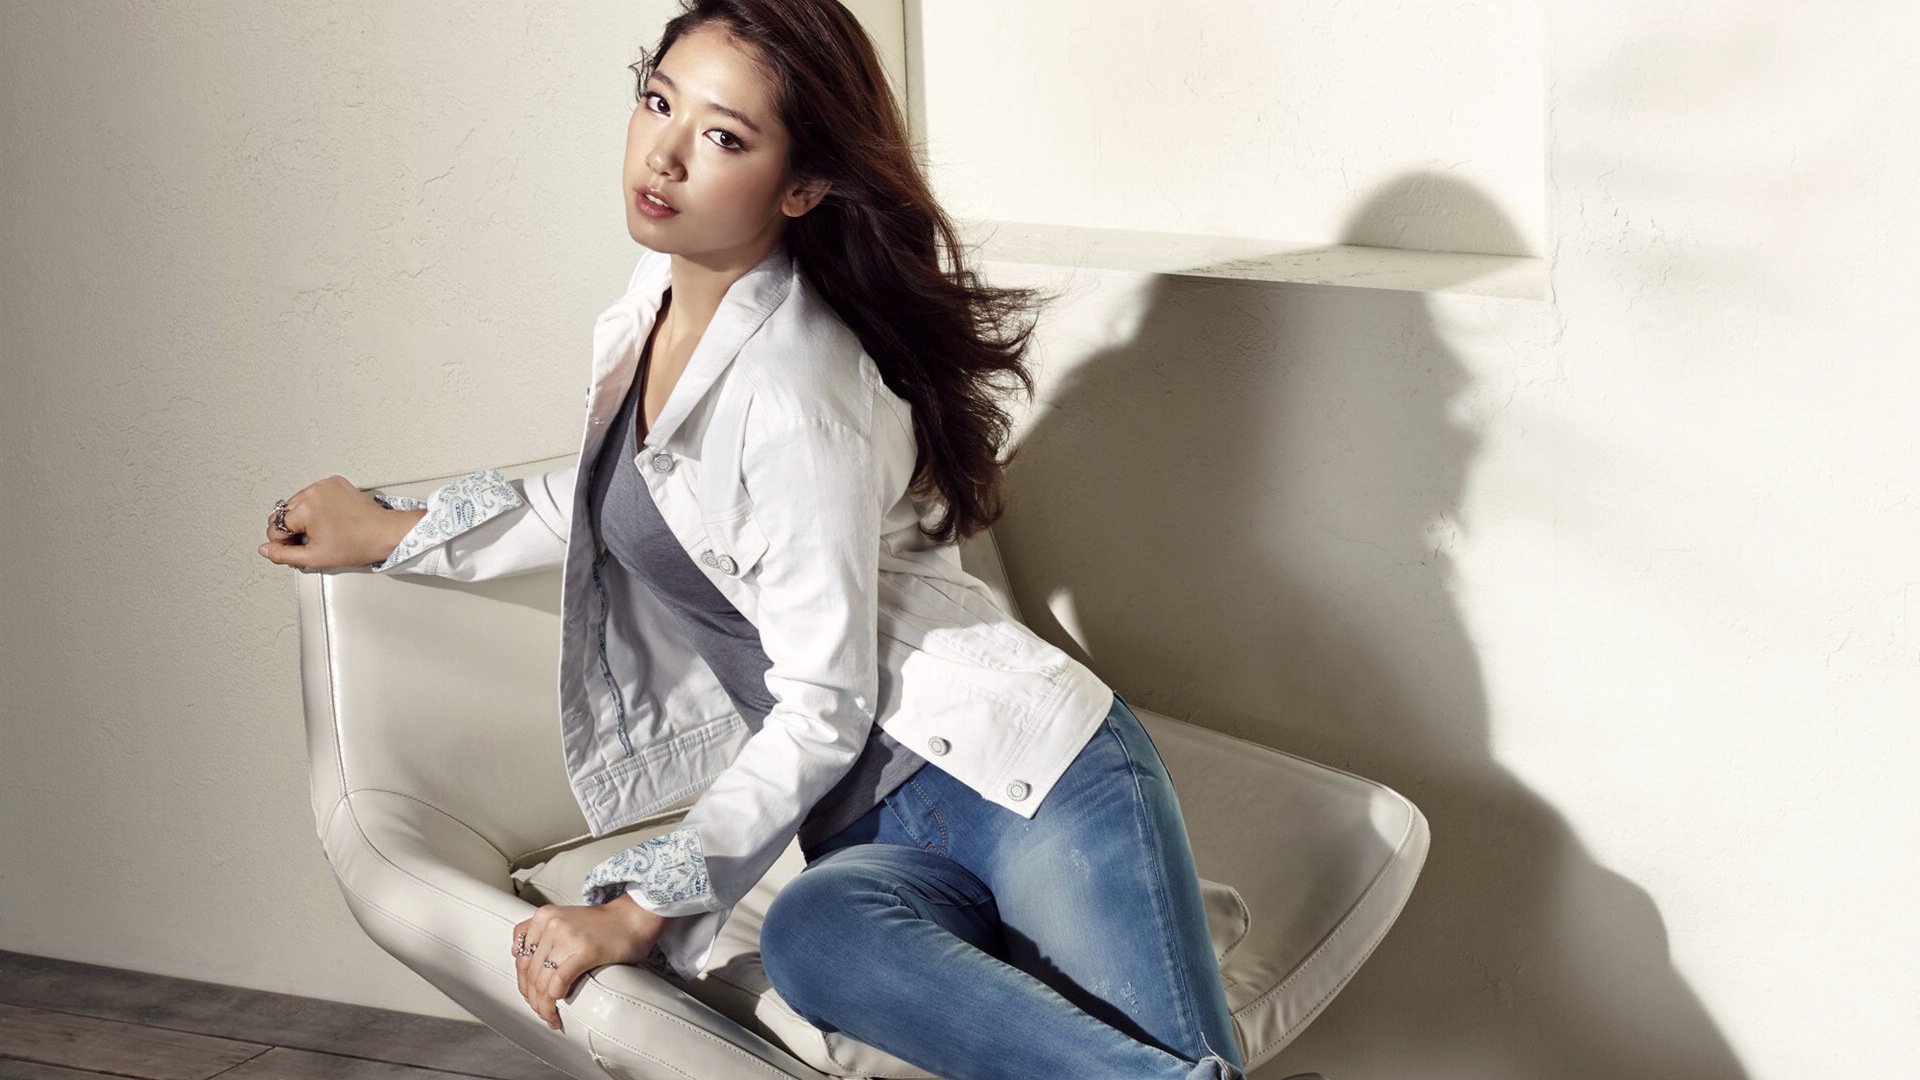 South Korean actress Park Shin Hye HD Wallpapers #4 - 1920x1080